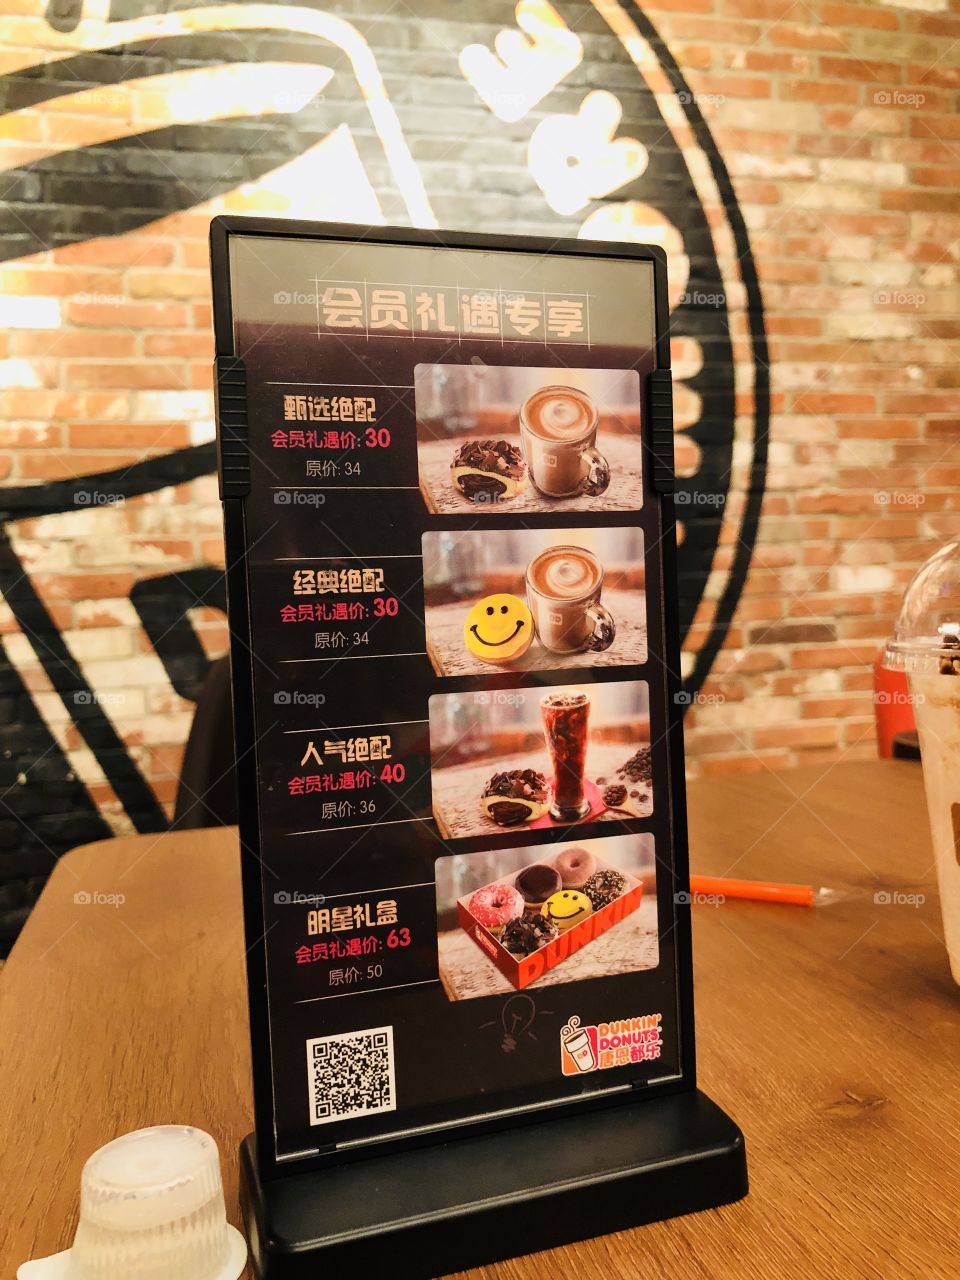 The advertising menus of Donuts 